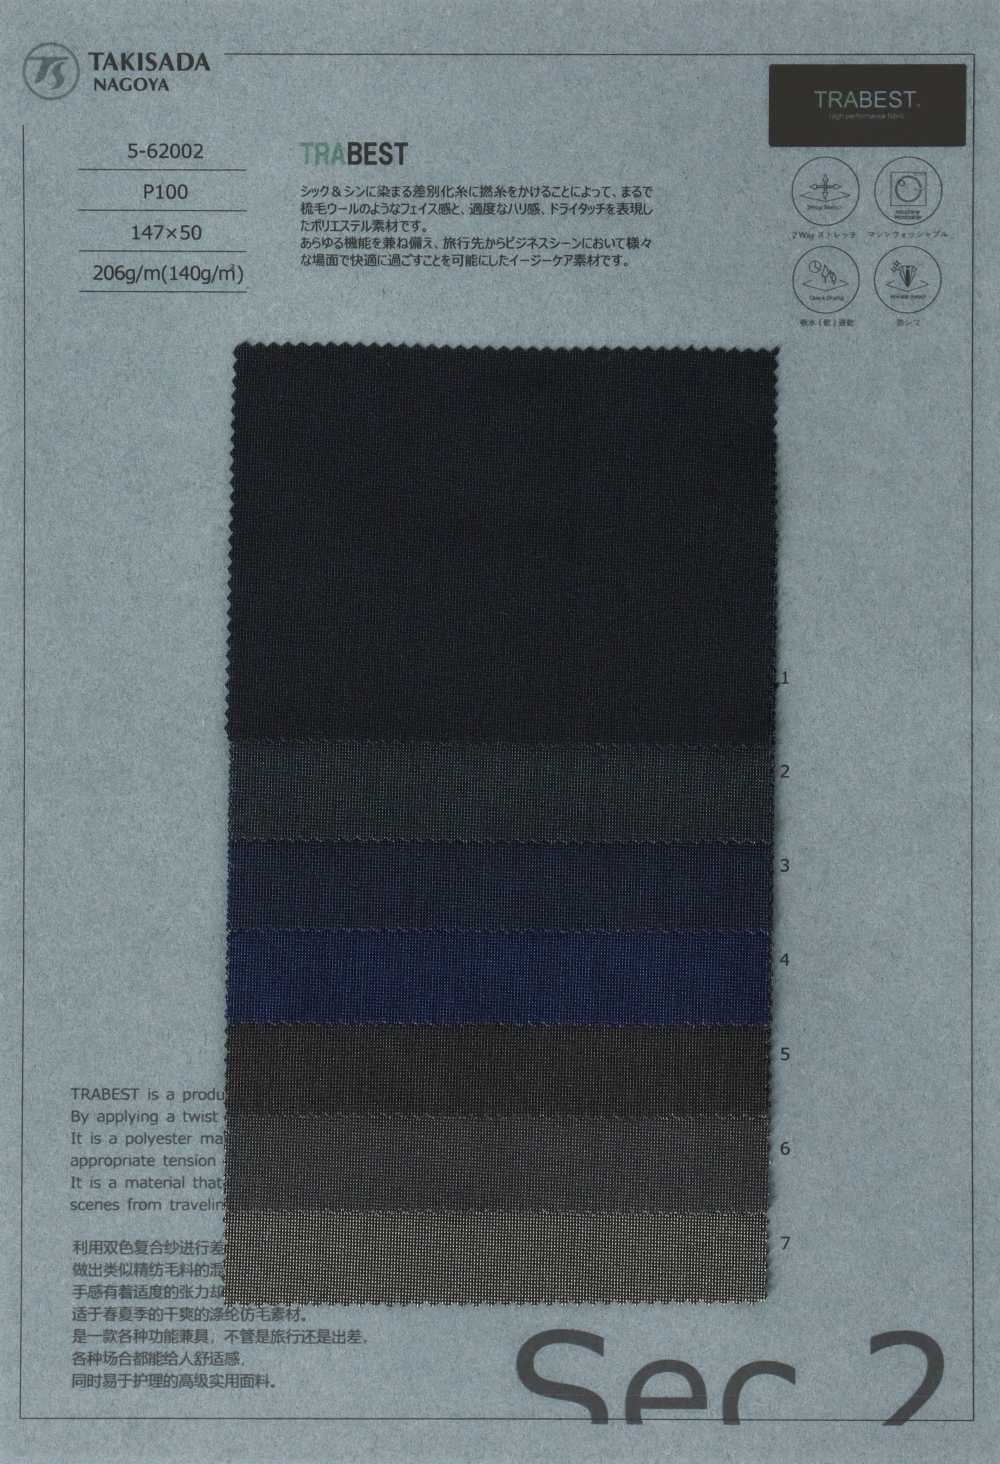 5-62002 Tête D&#39;épingle Tropicale TRABEST Dry Touch[Fabrication De Textile] Takisada Nagoya